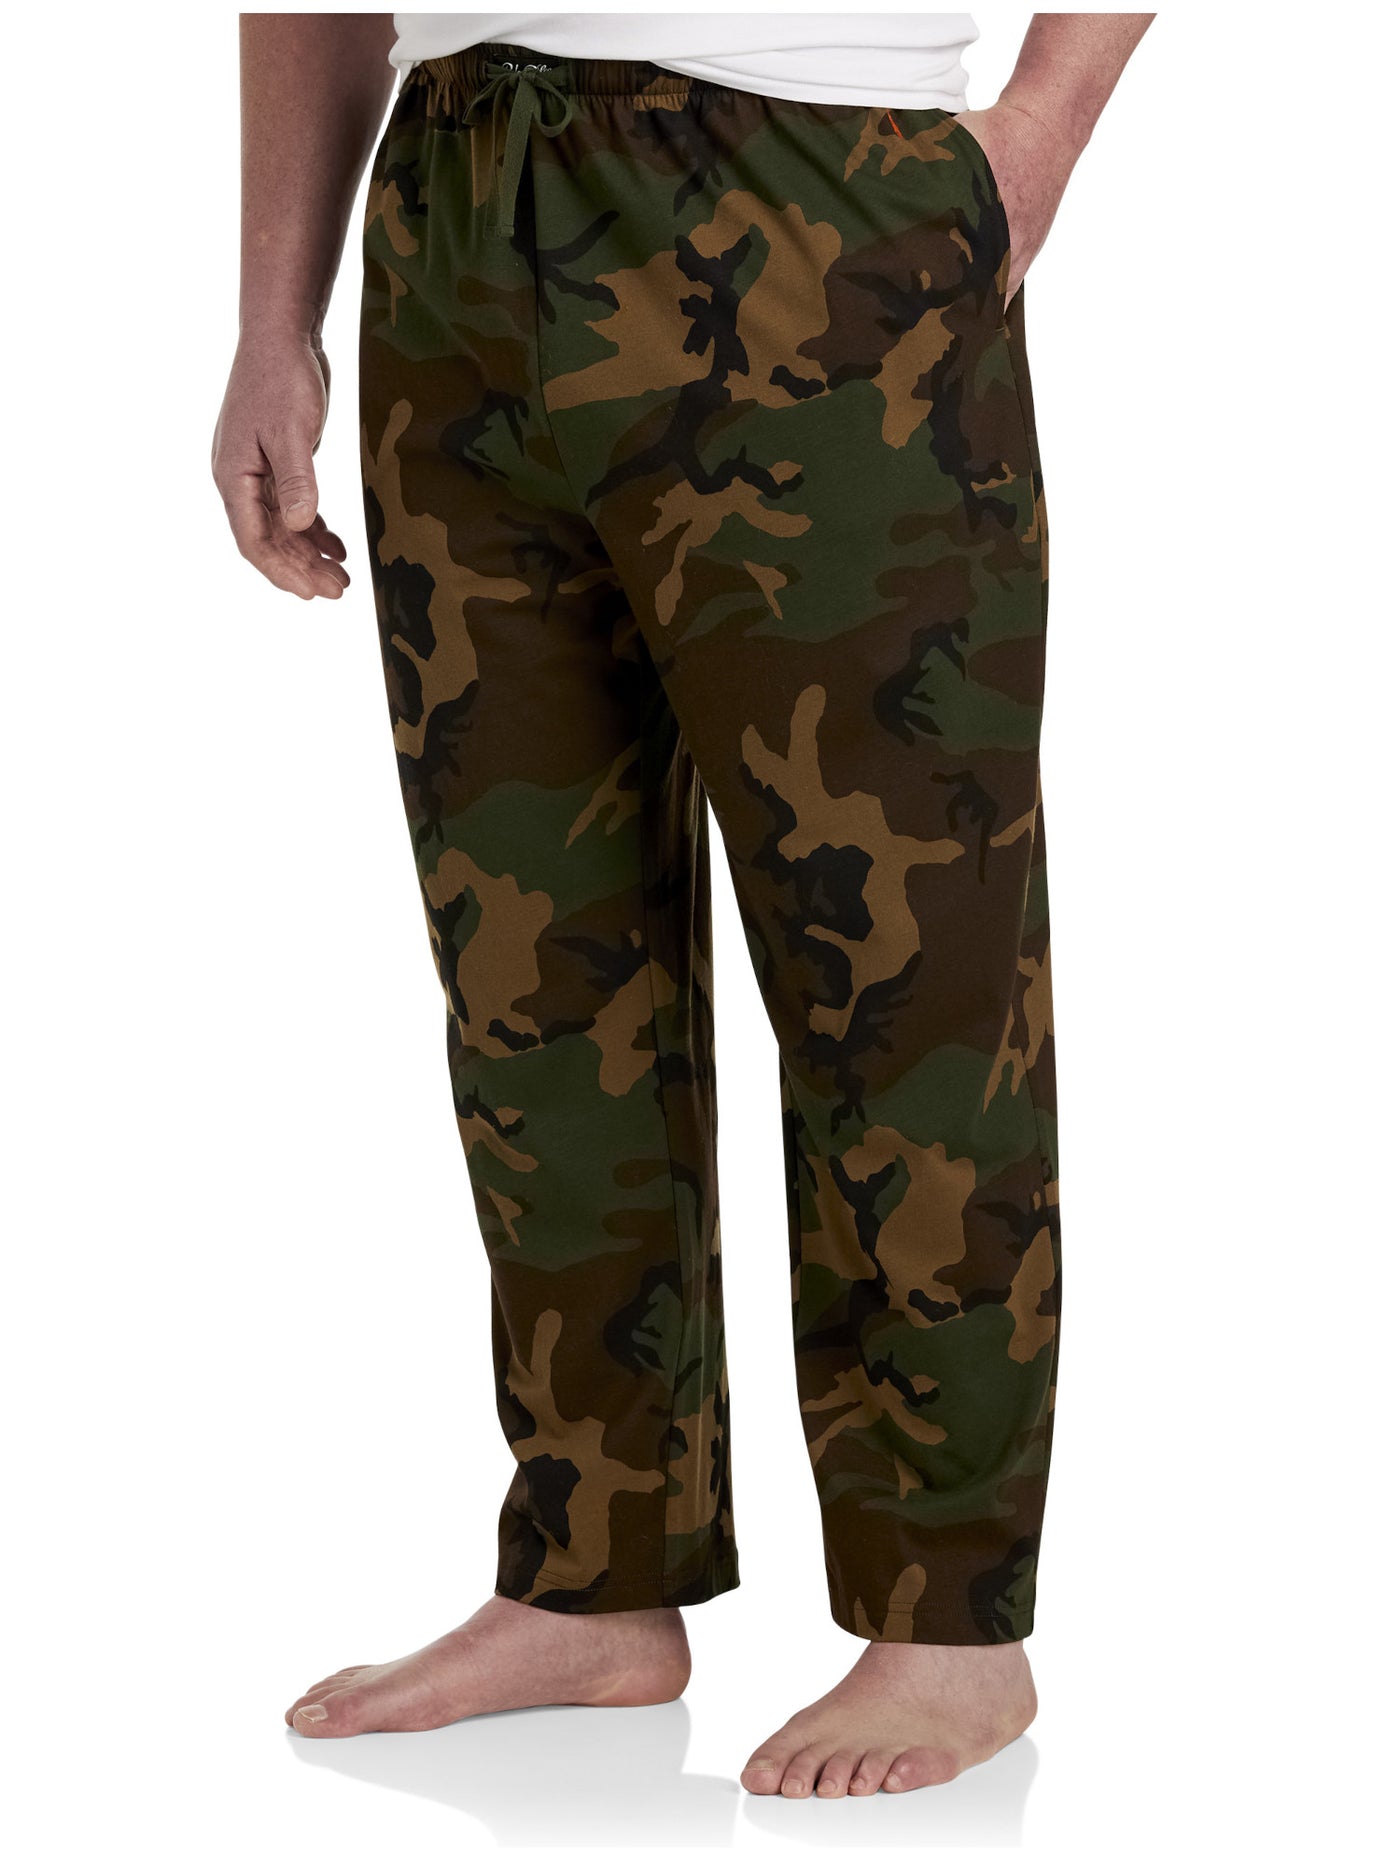 CLUBROOM Intimates Green Pocketed Camouflage Sleep Pants XL